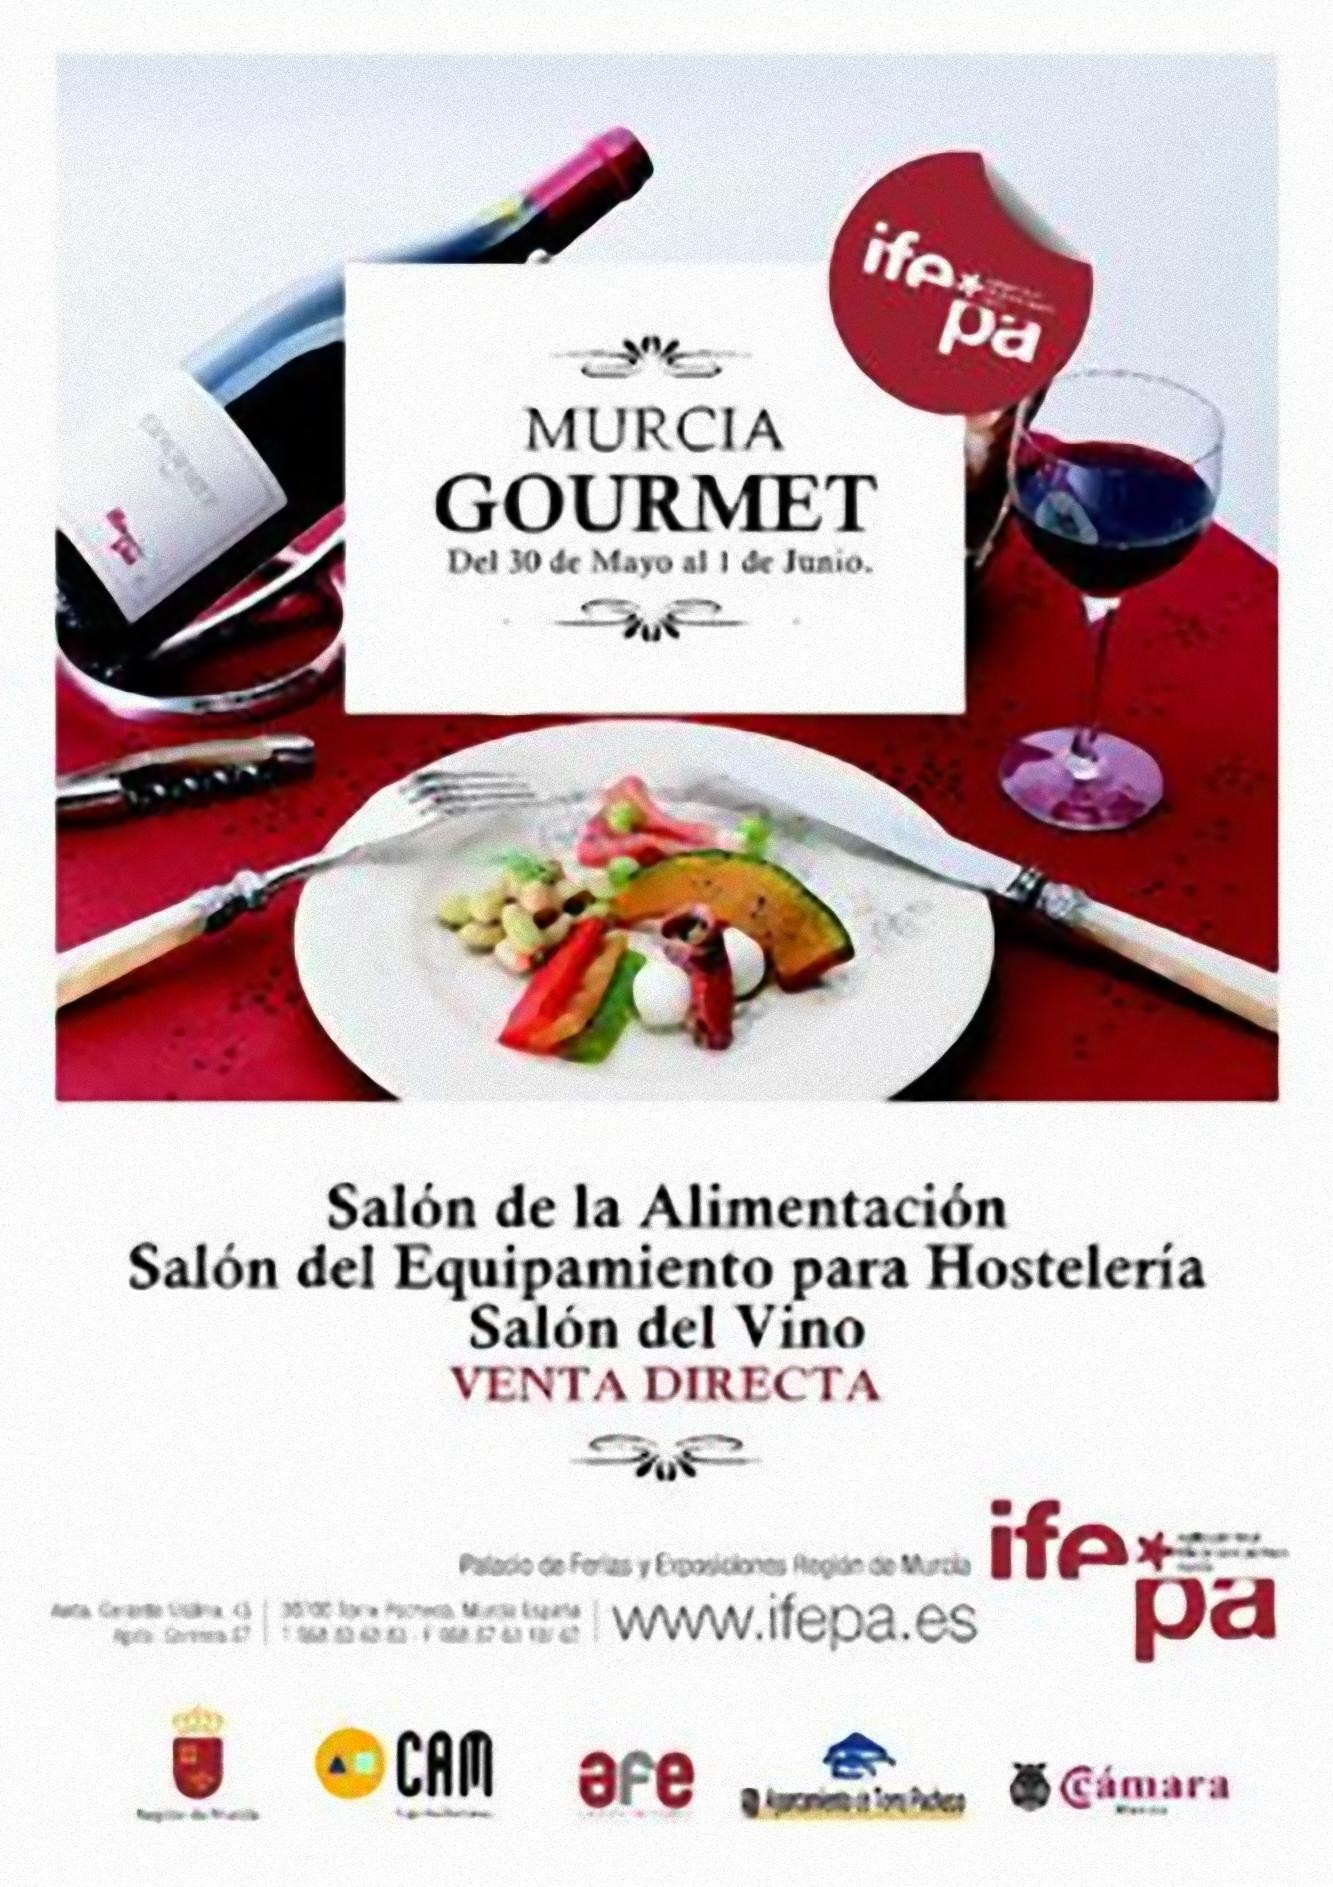 Murcia Gourmet 2009